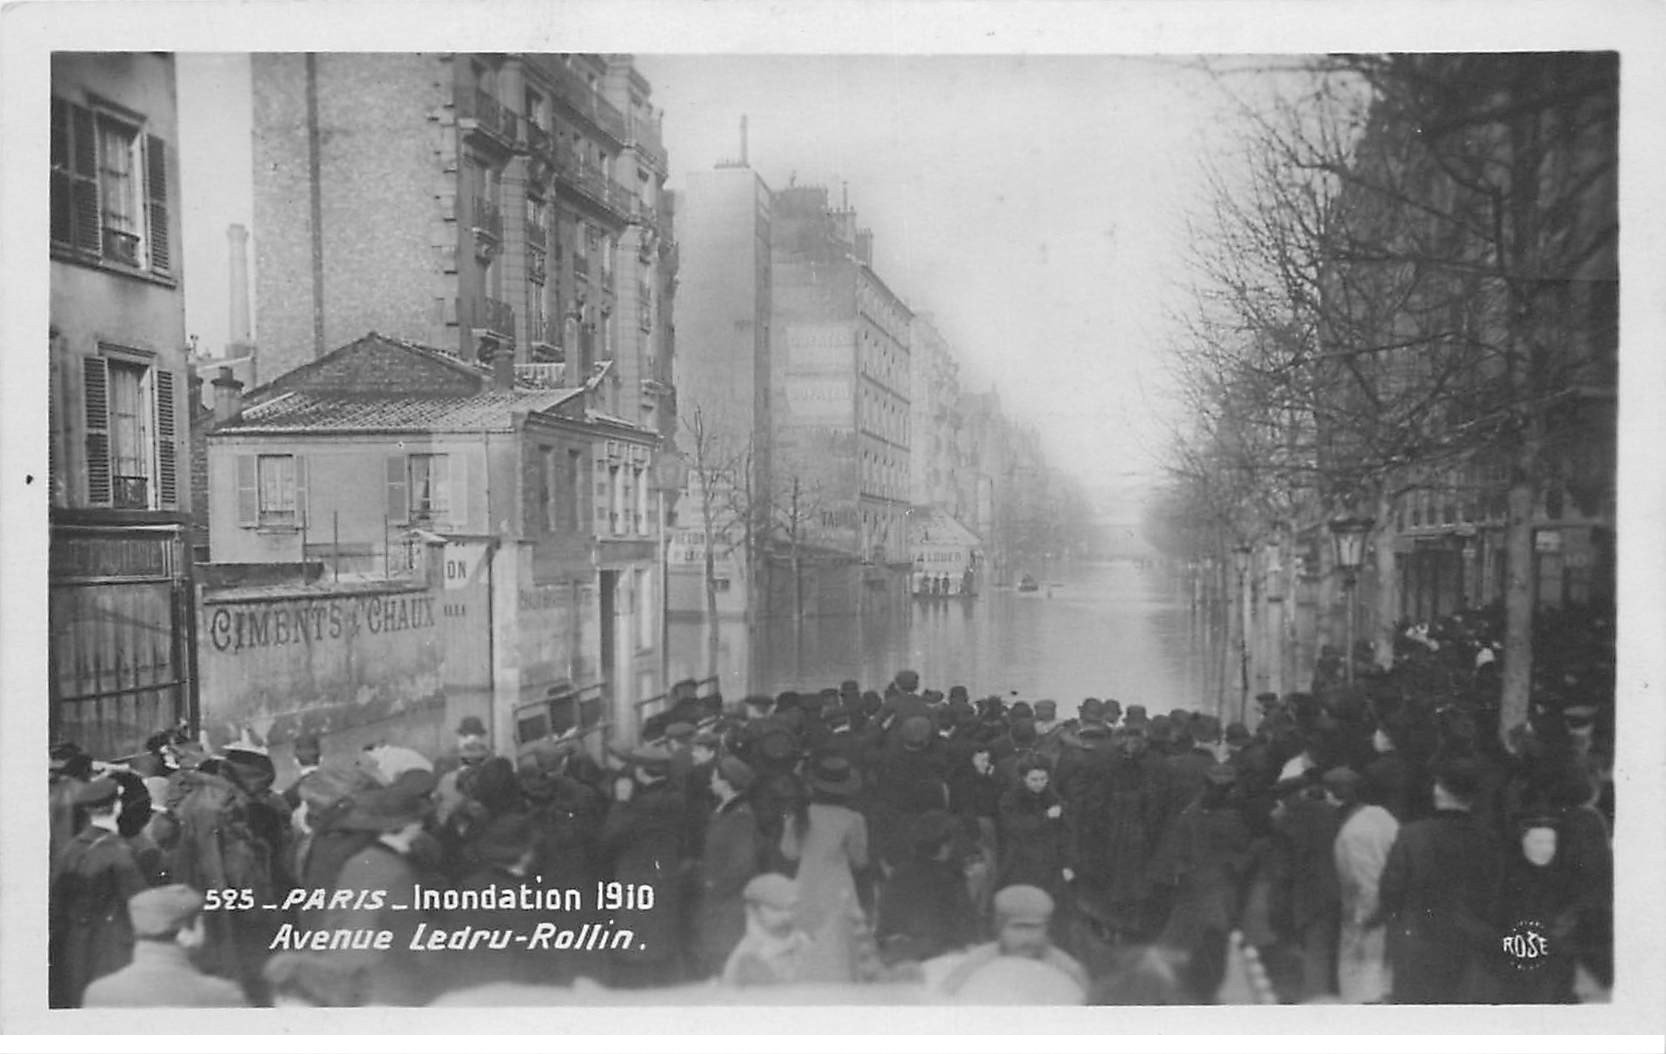 INONDATION DE PARIS 1910. Avenue Ledru Rollin